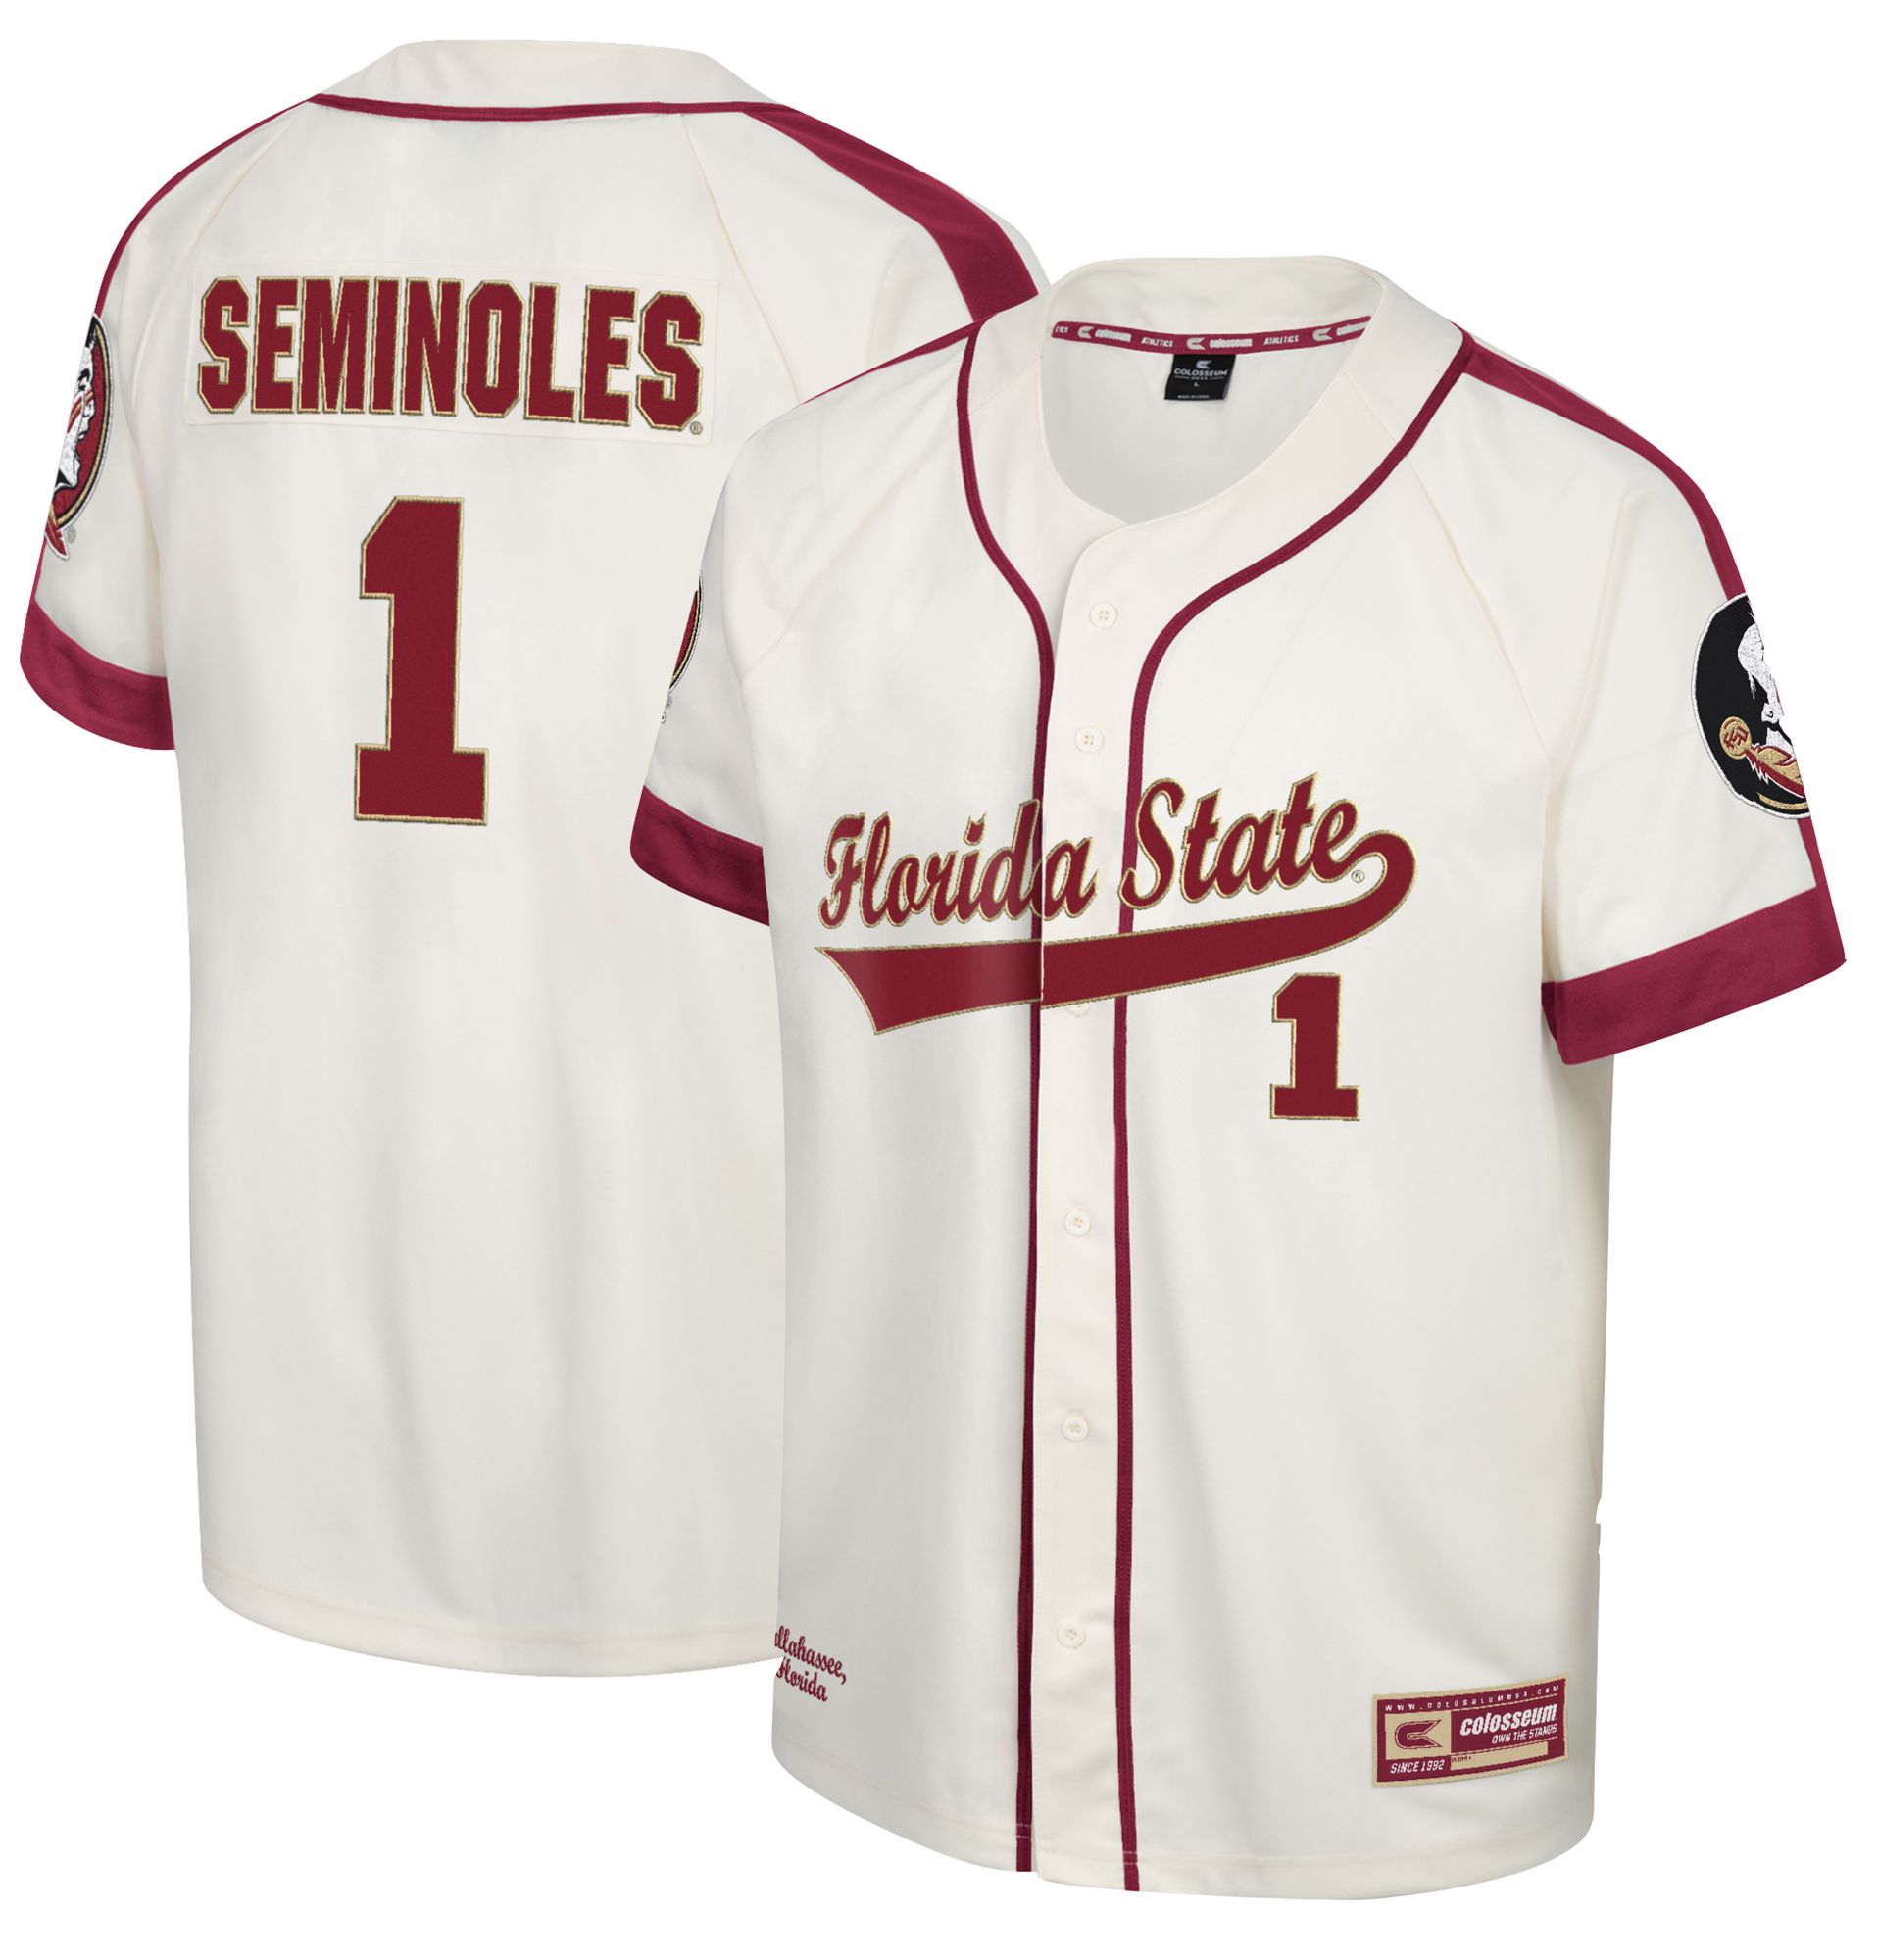 Seminoles baseball championship jersey